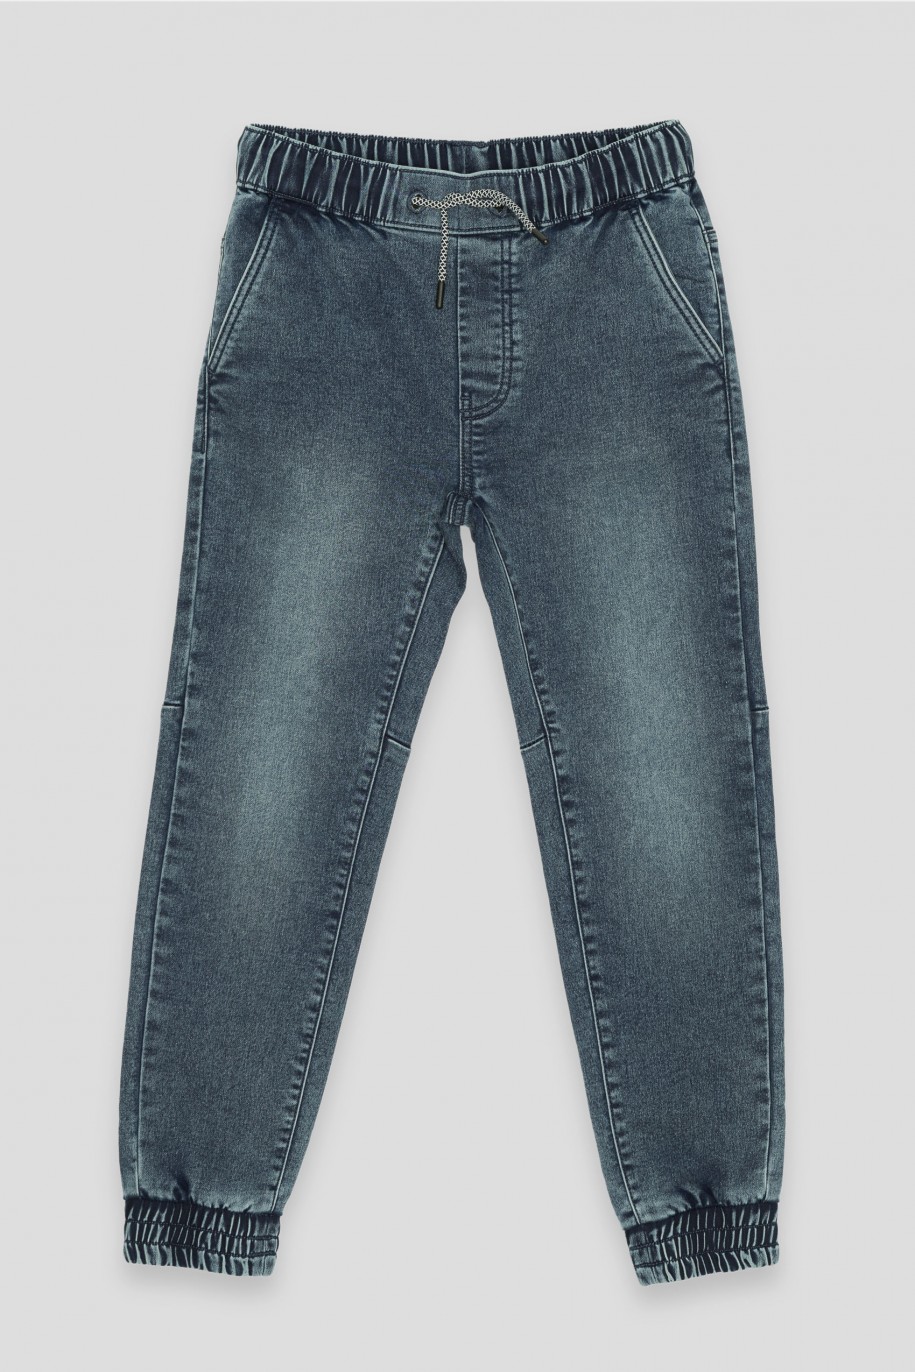 Niebieskie jeansy typu JOGGER o luźnym kroju - 40845